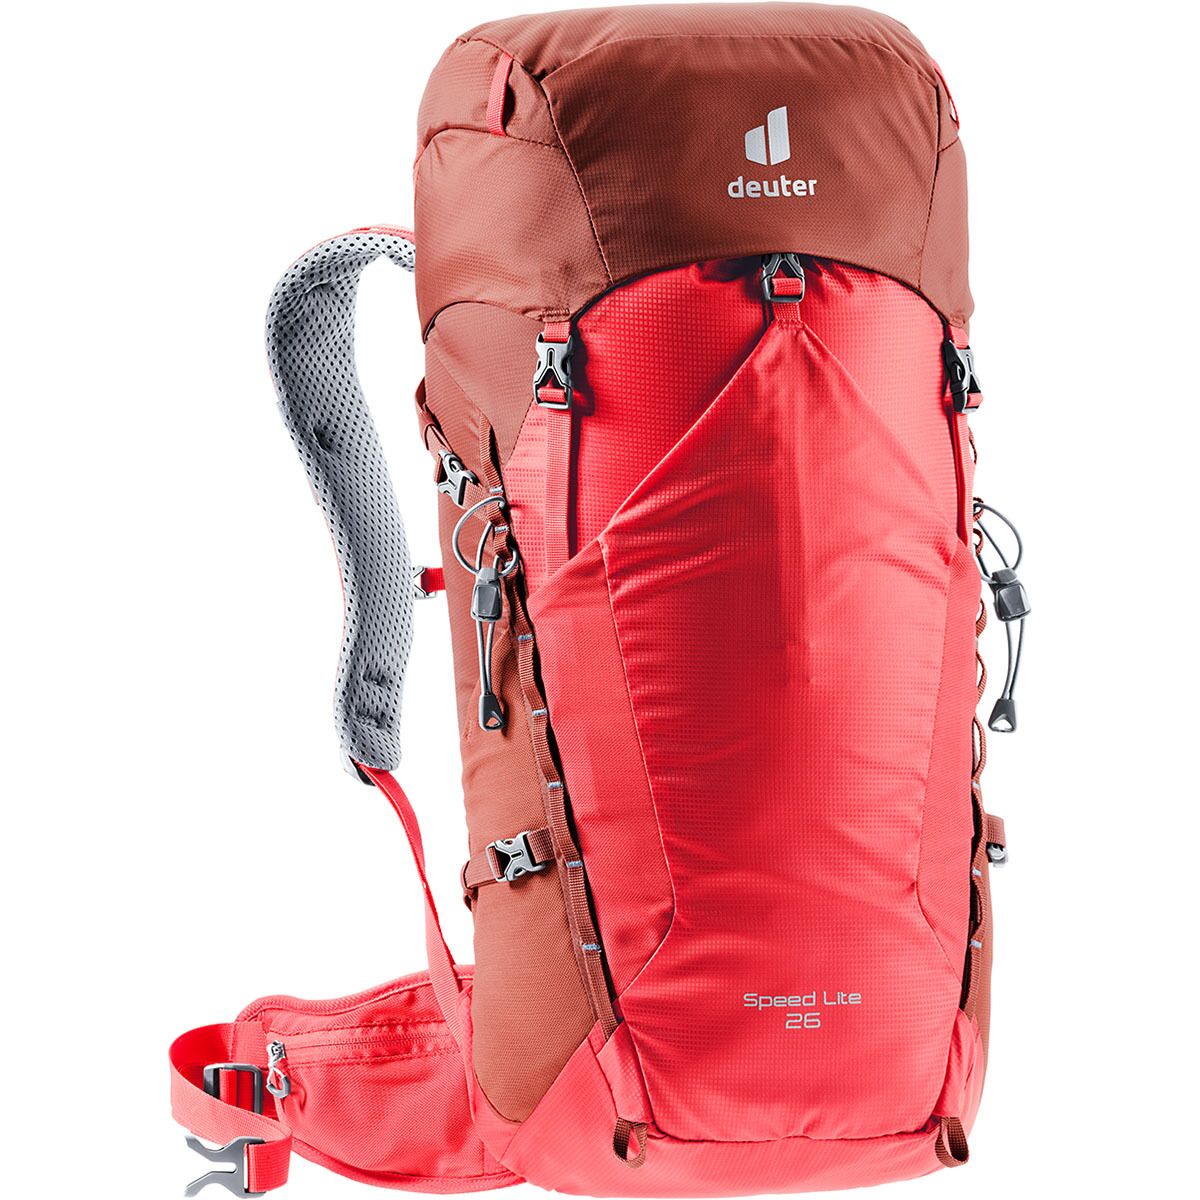 Deuter Speed Lite 26L men and women's daypack for hiking